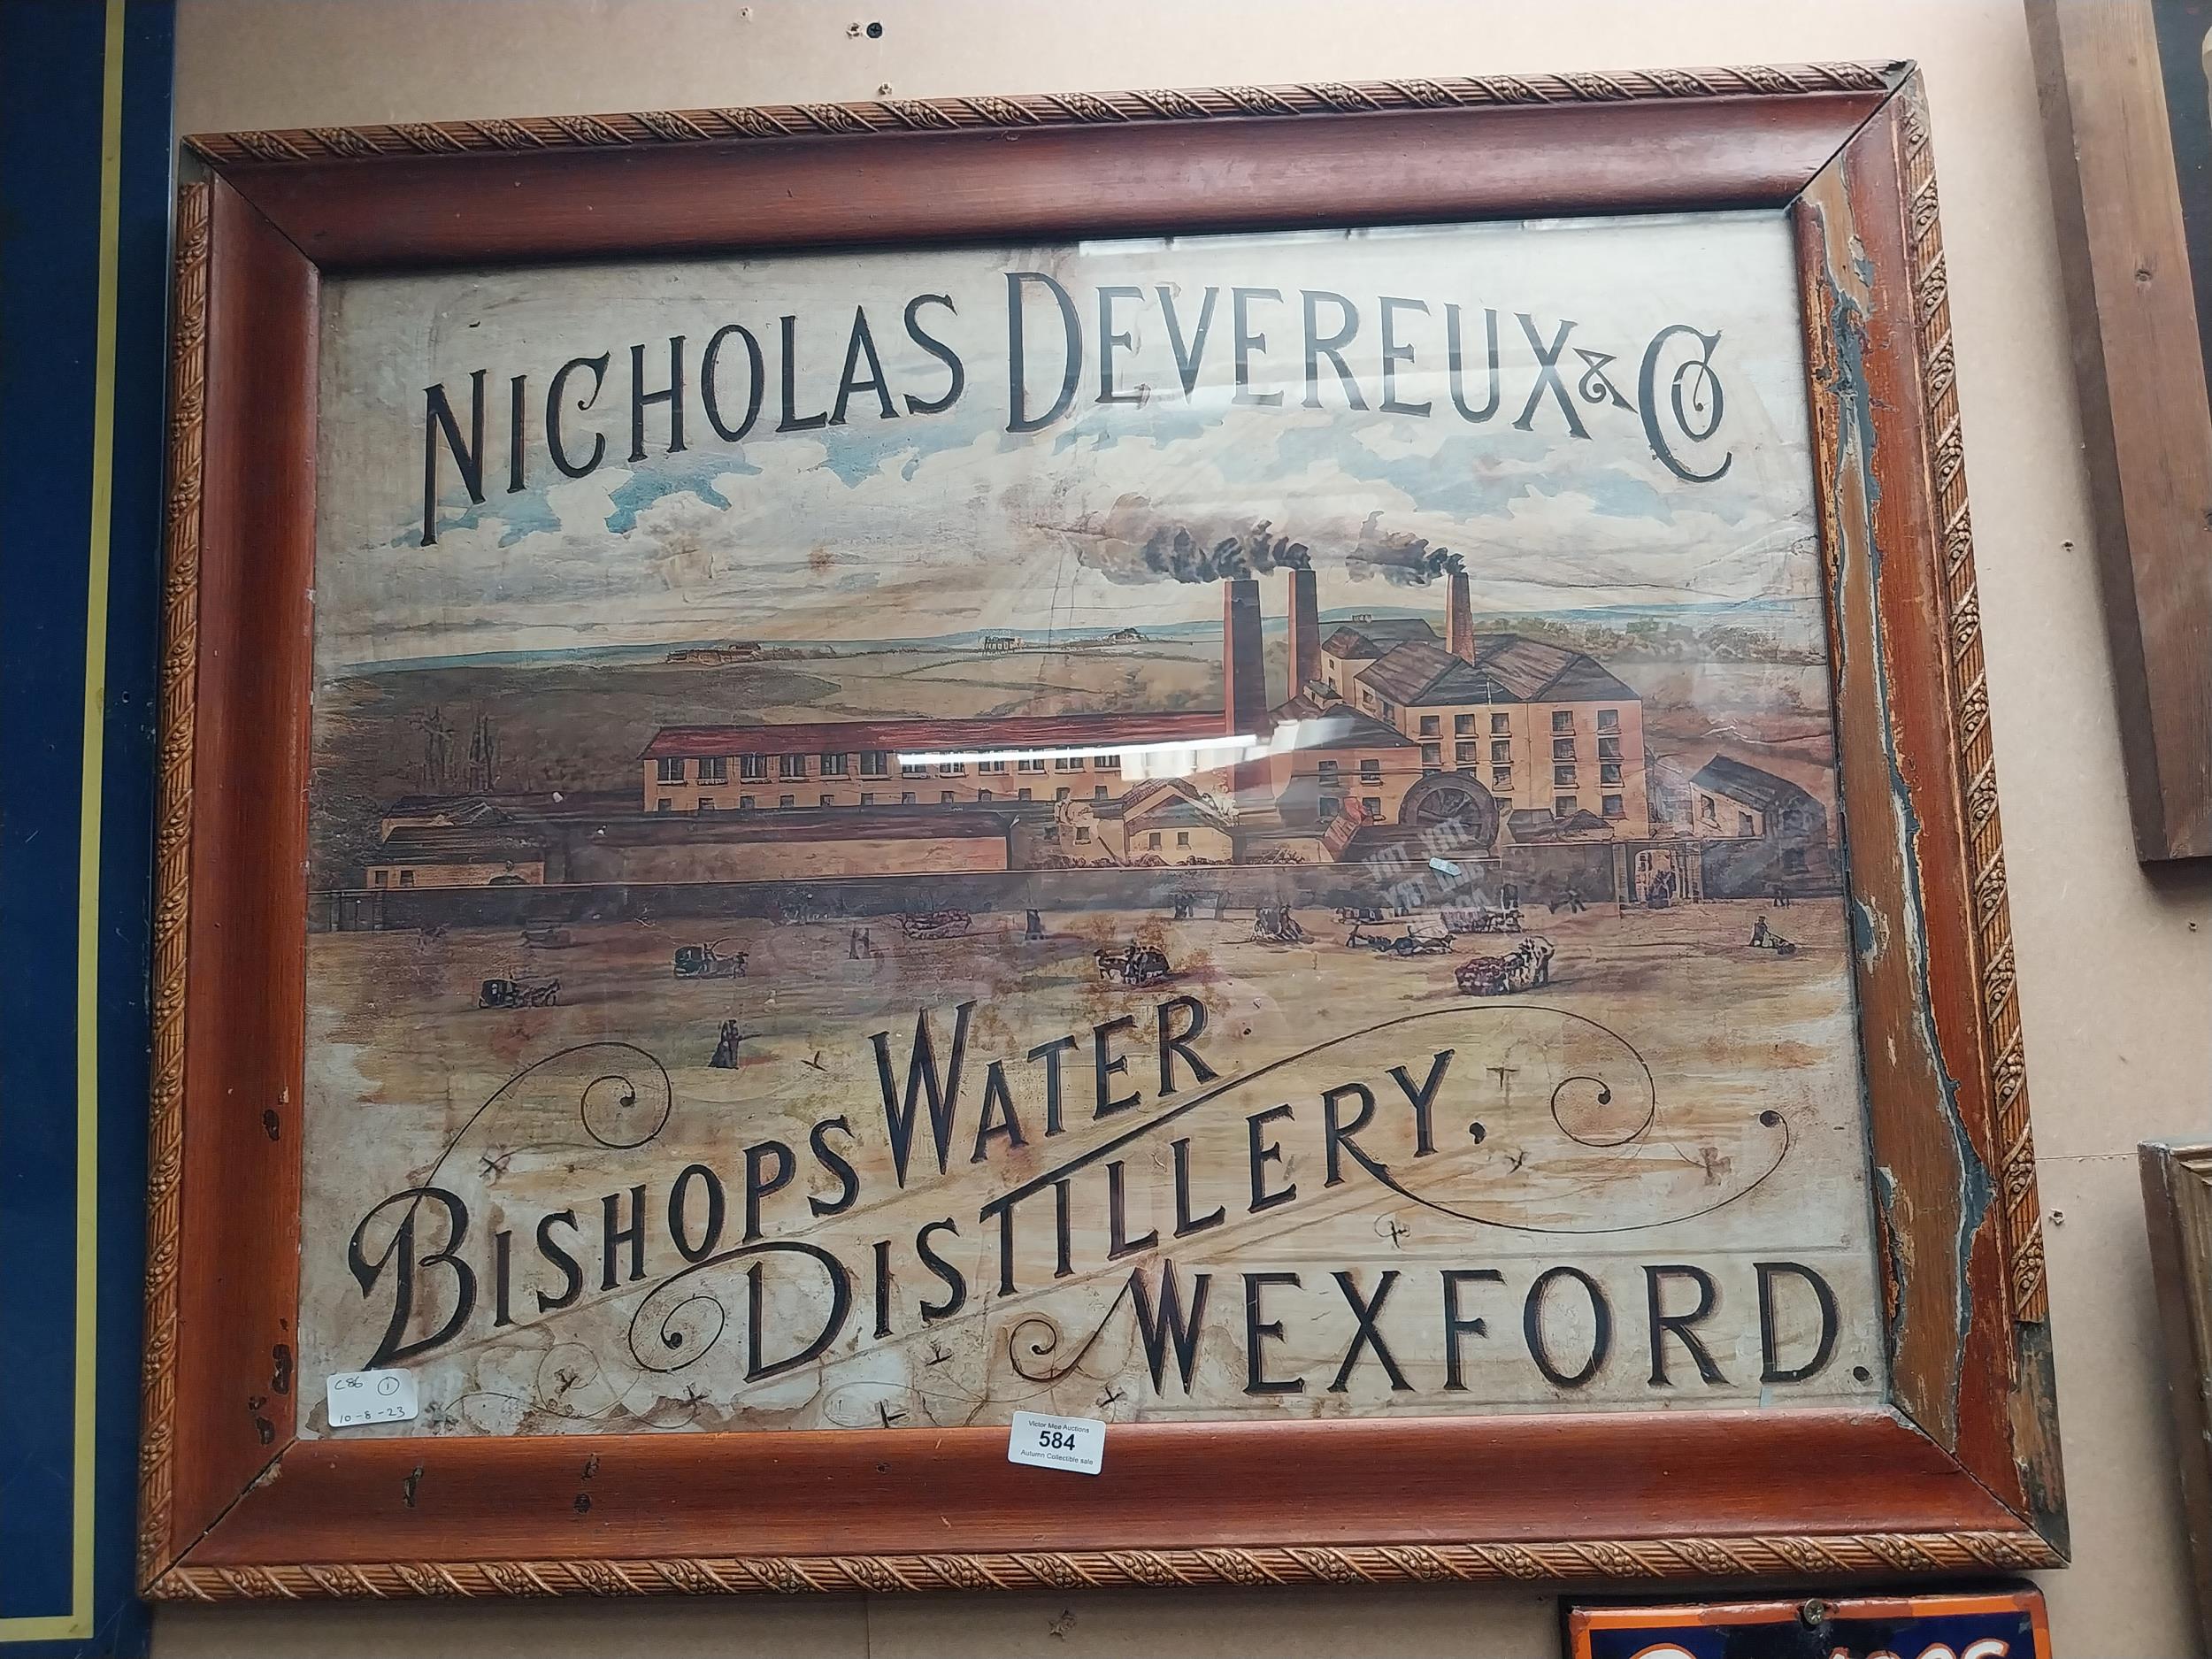 Nicholas Deveraux and Co Bishops water Distillery Wexford framed advertising print. {64 cm H x 76 cm